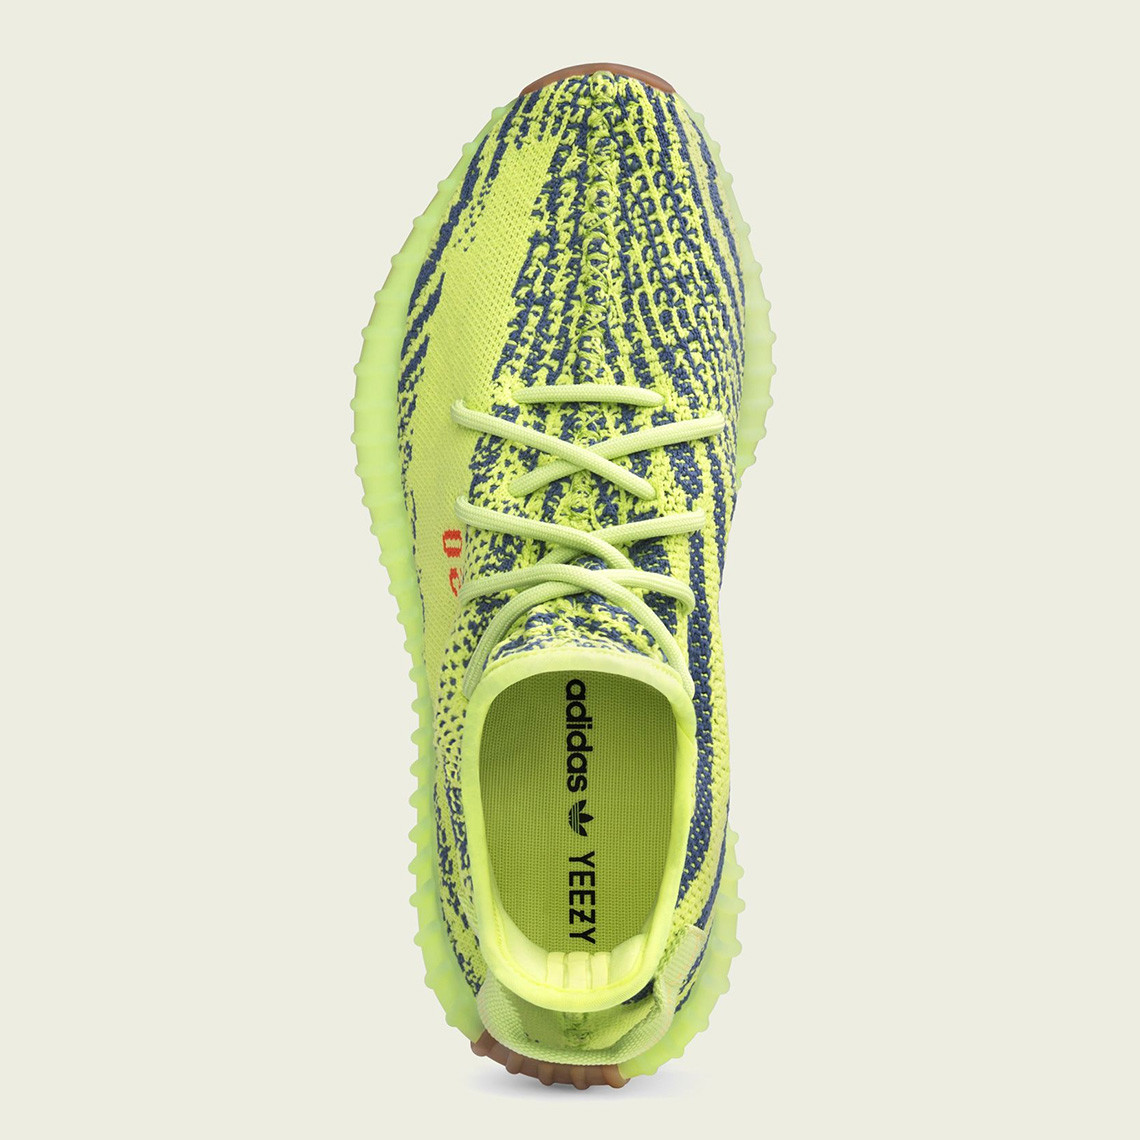 adidas Yeezy Boost 350 v2 “Semi-Frozen Yellow”